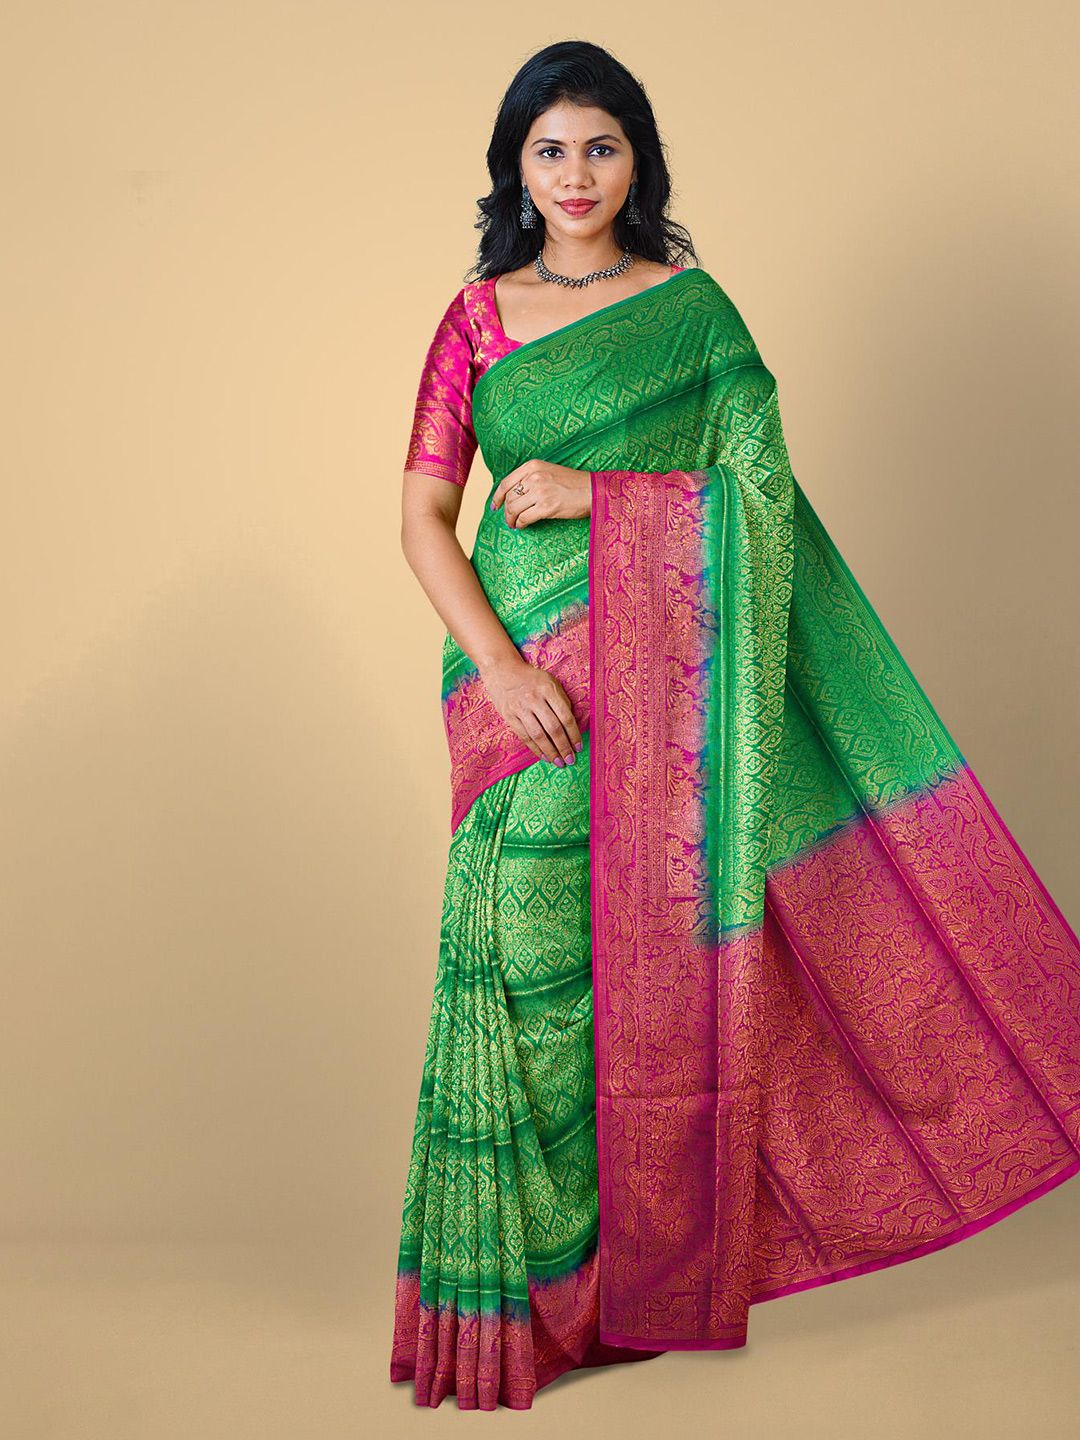 Kalamandir Green & Pink Ethnic Motifs Zari Banarasi Saree Price in India